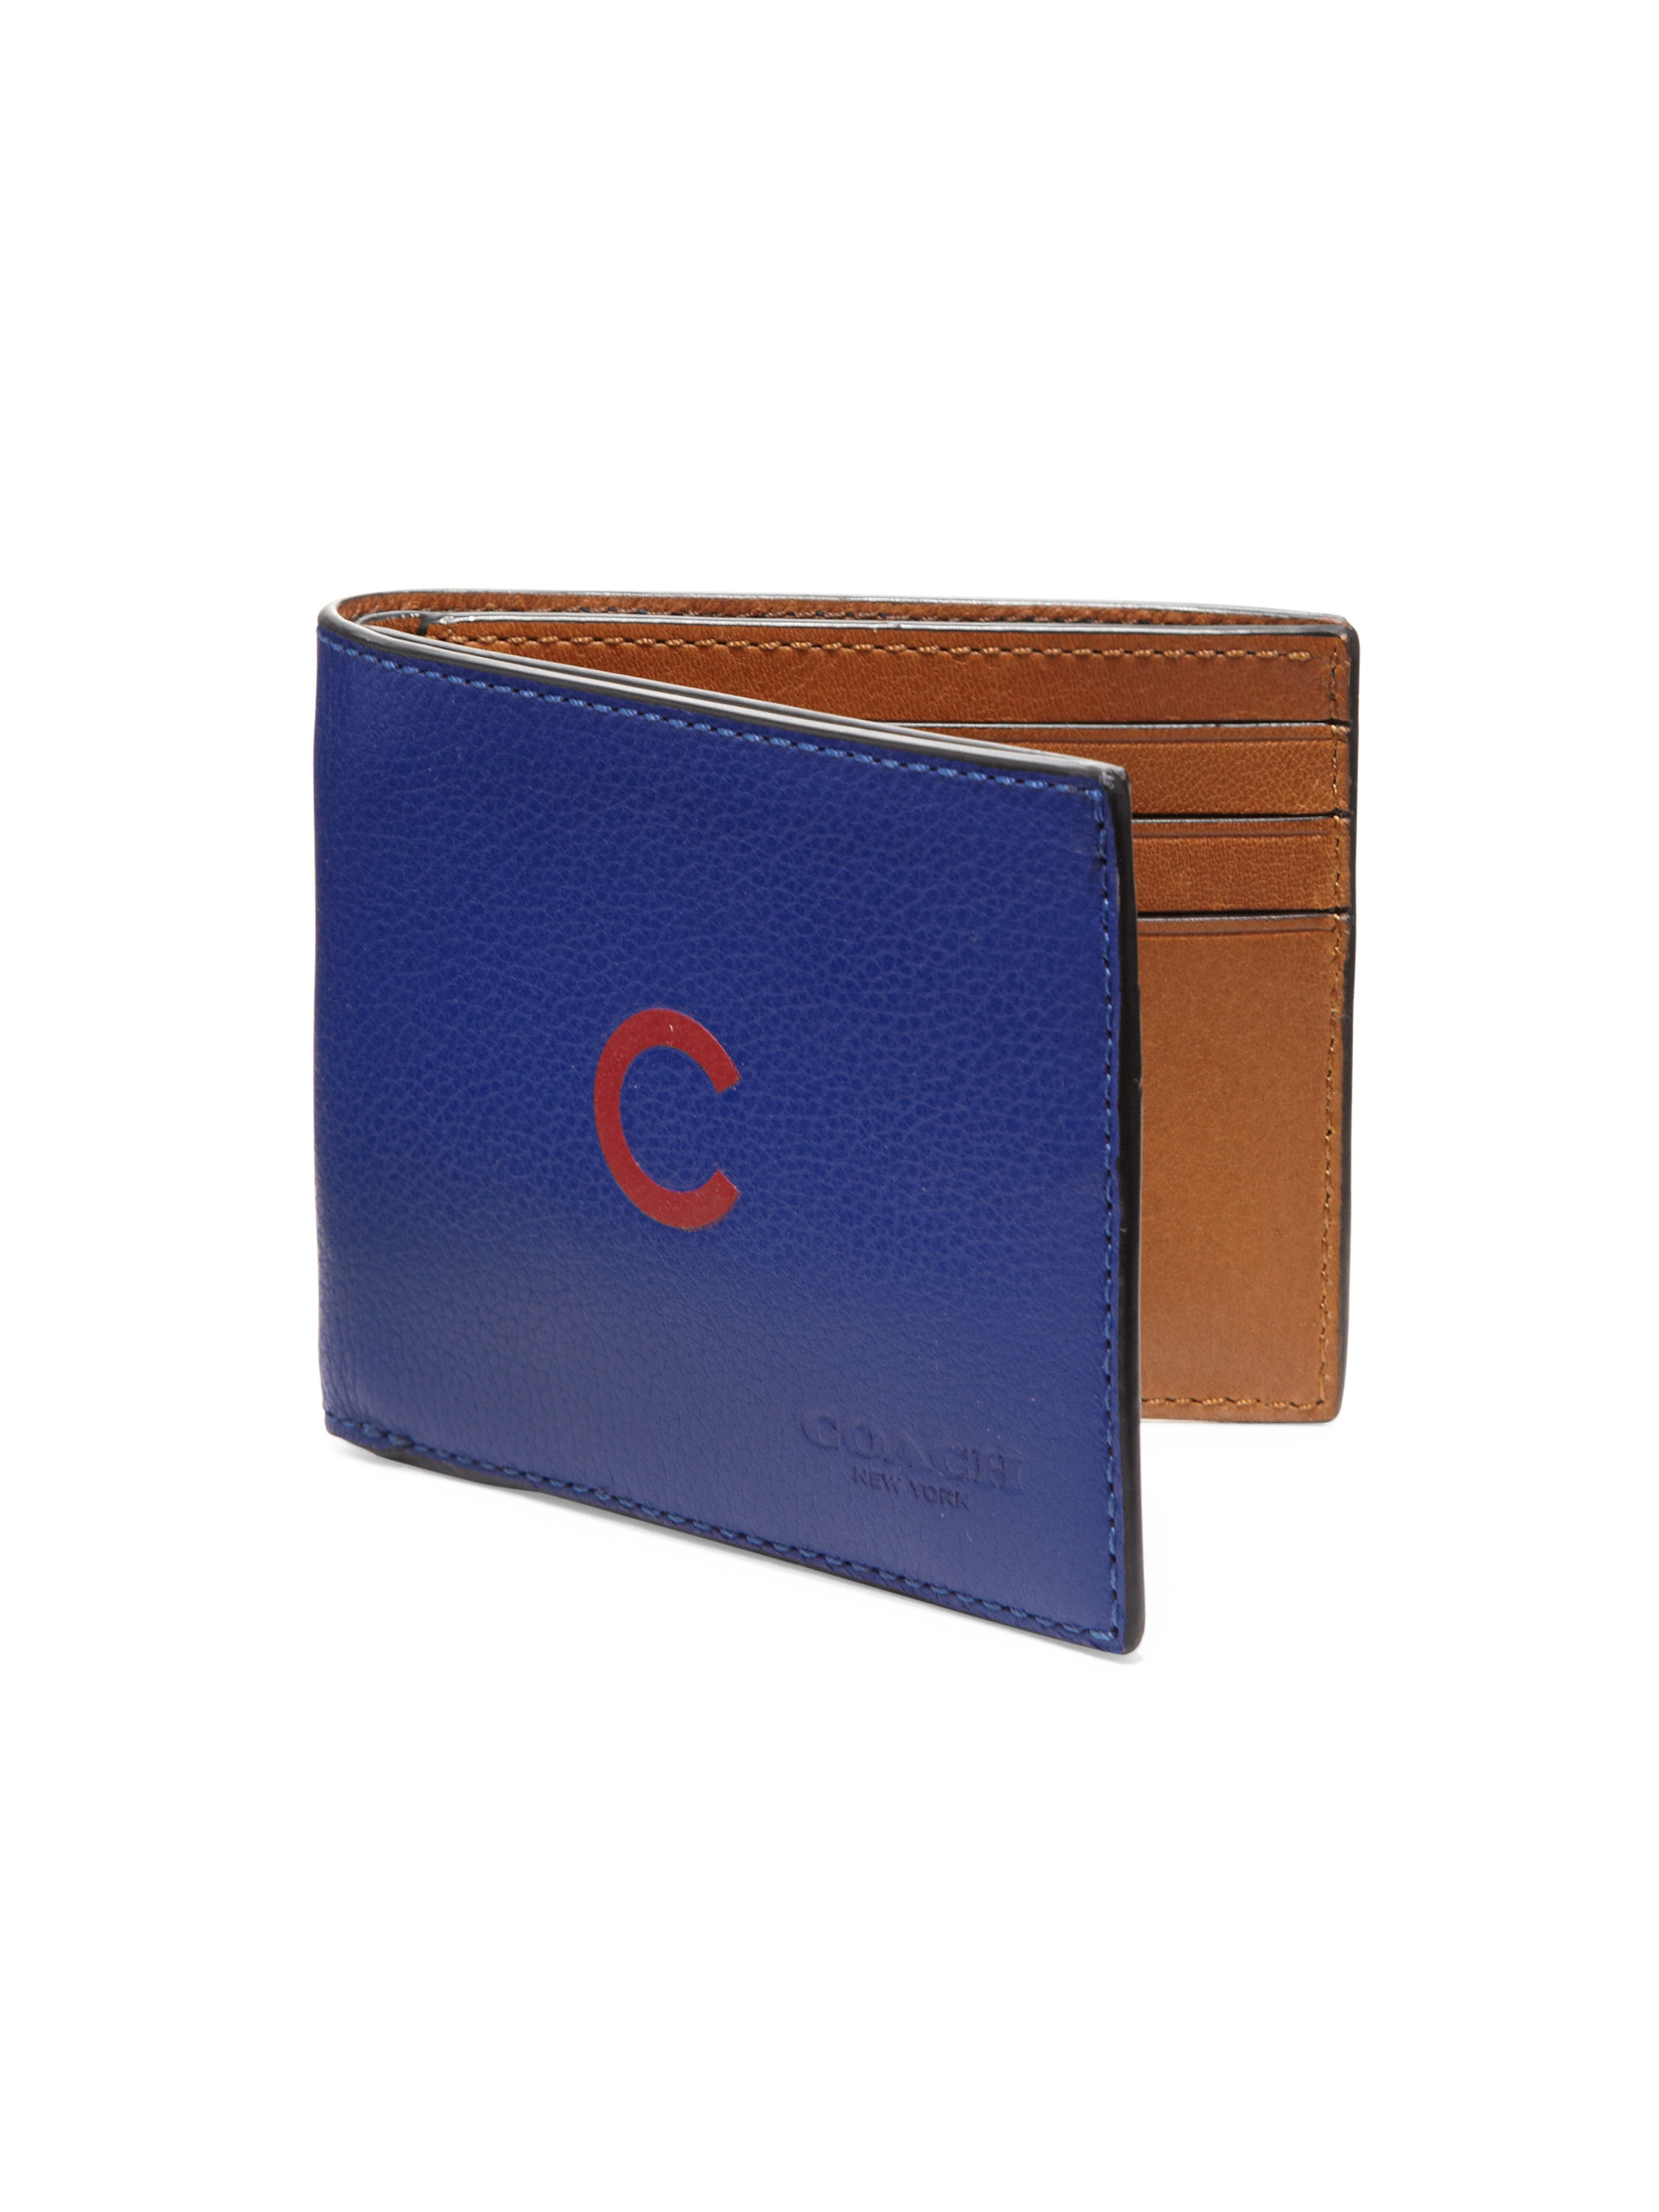 COACH Bifold Leather Wallet in Blue for Men - Lyst